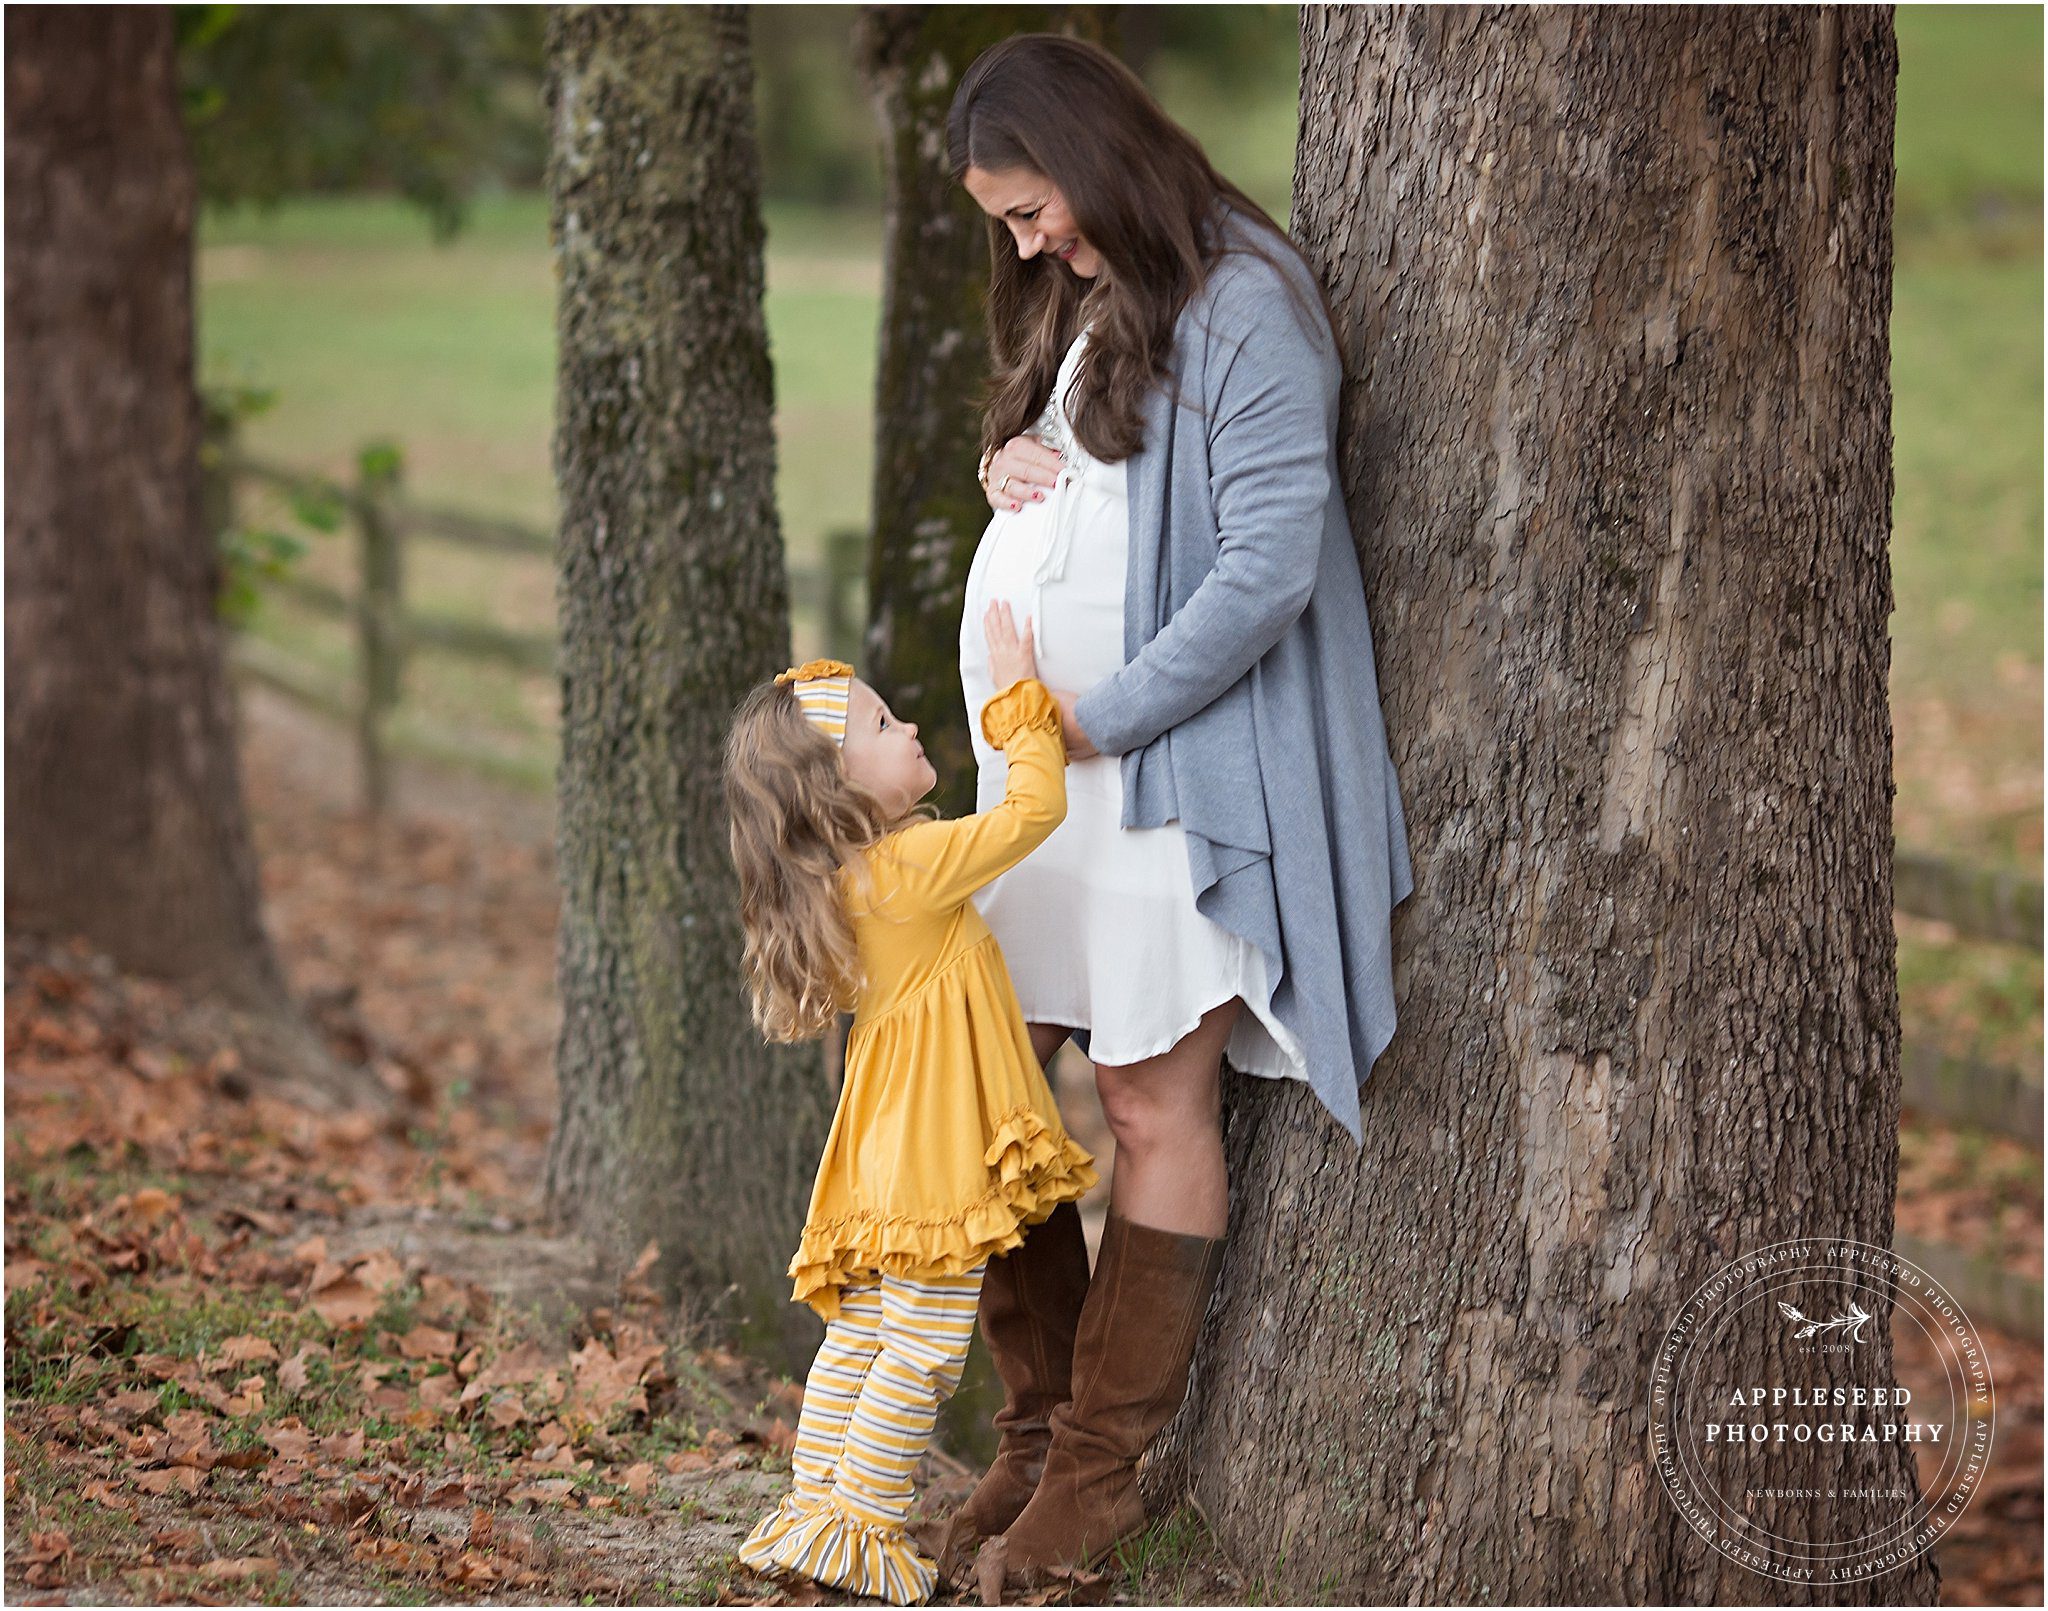 M Family | Atlanta Maternity Photographer | Appleseed Photography